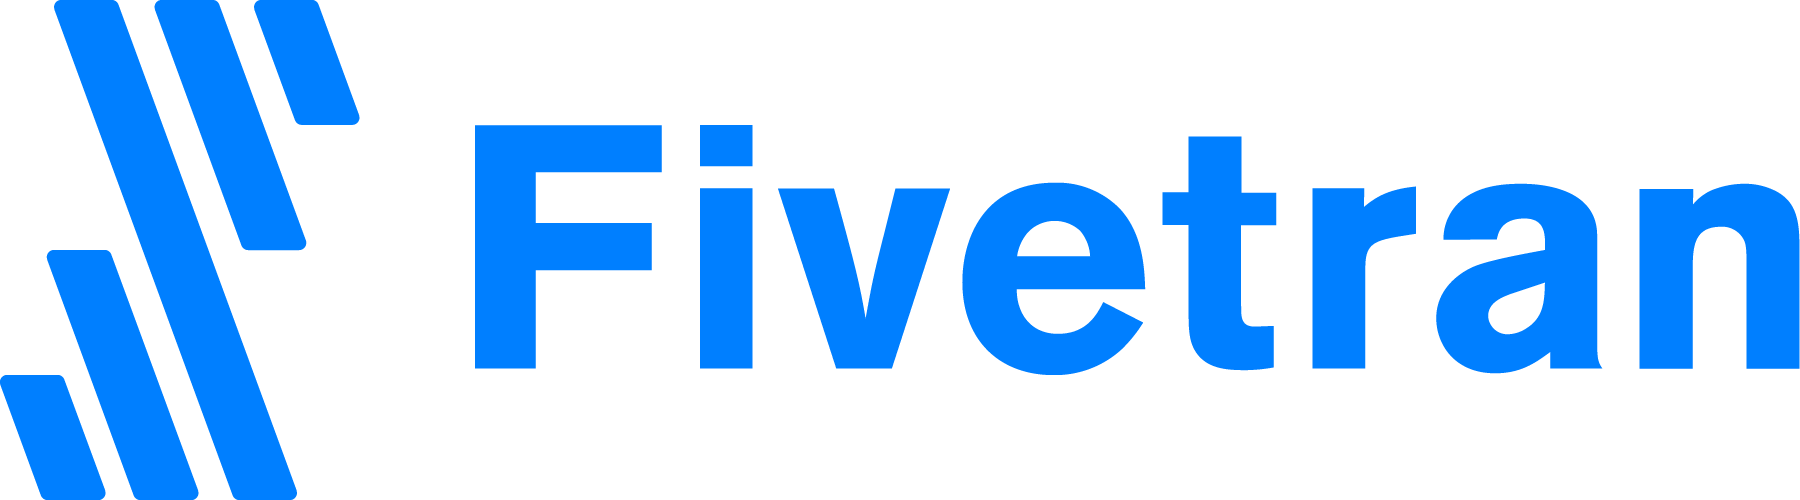 fivetran-logo-blue-rgb-2021-08-03